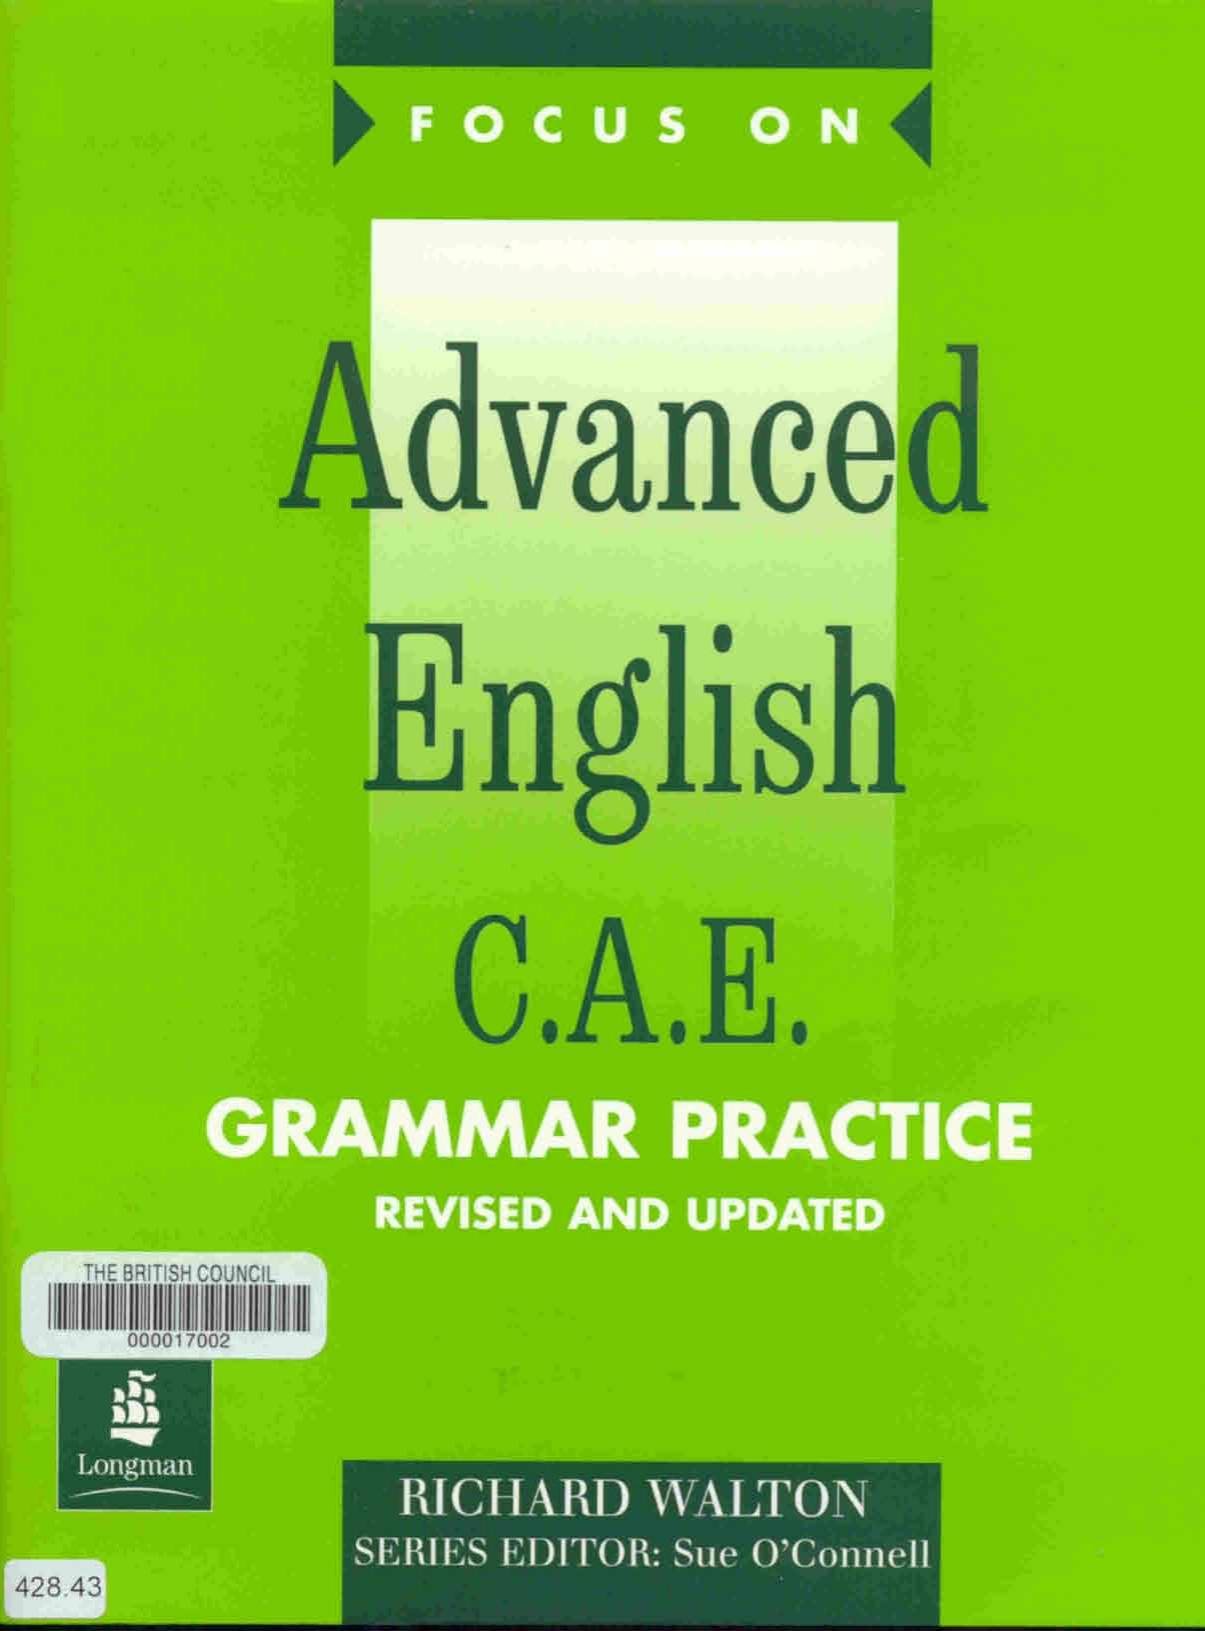 Focus on Advanced English C. A. E.: Grammar Practice